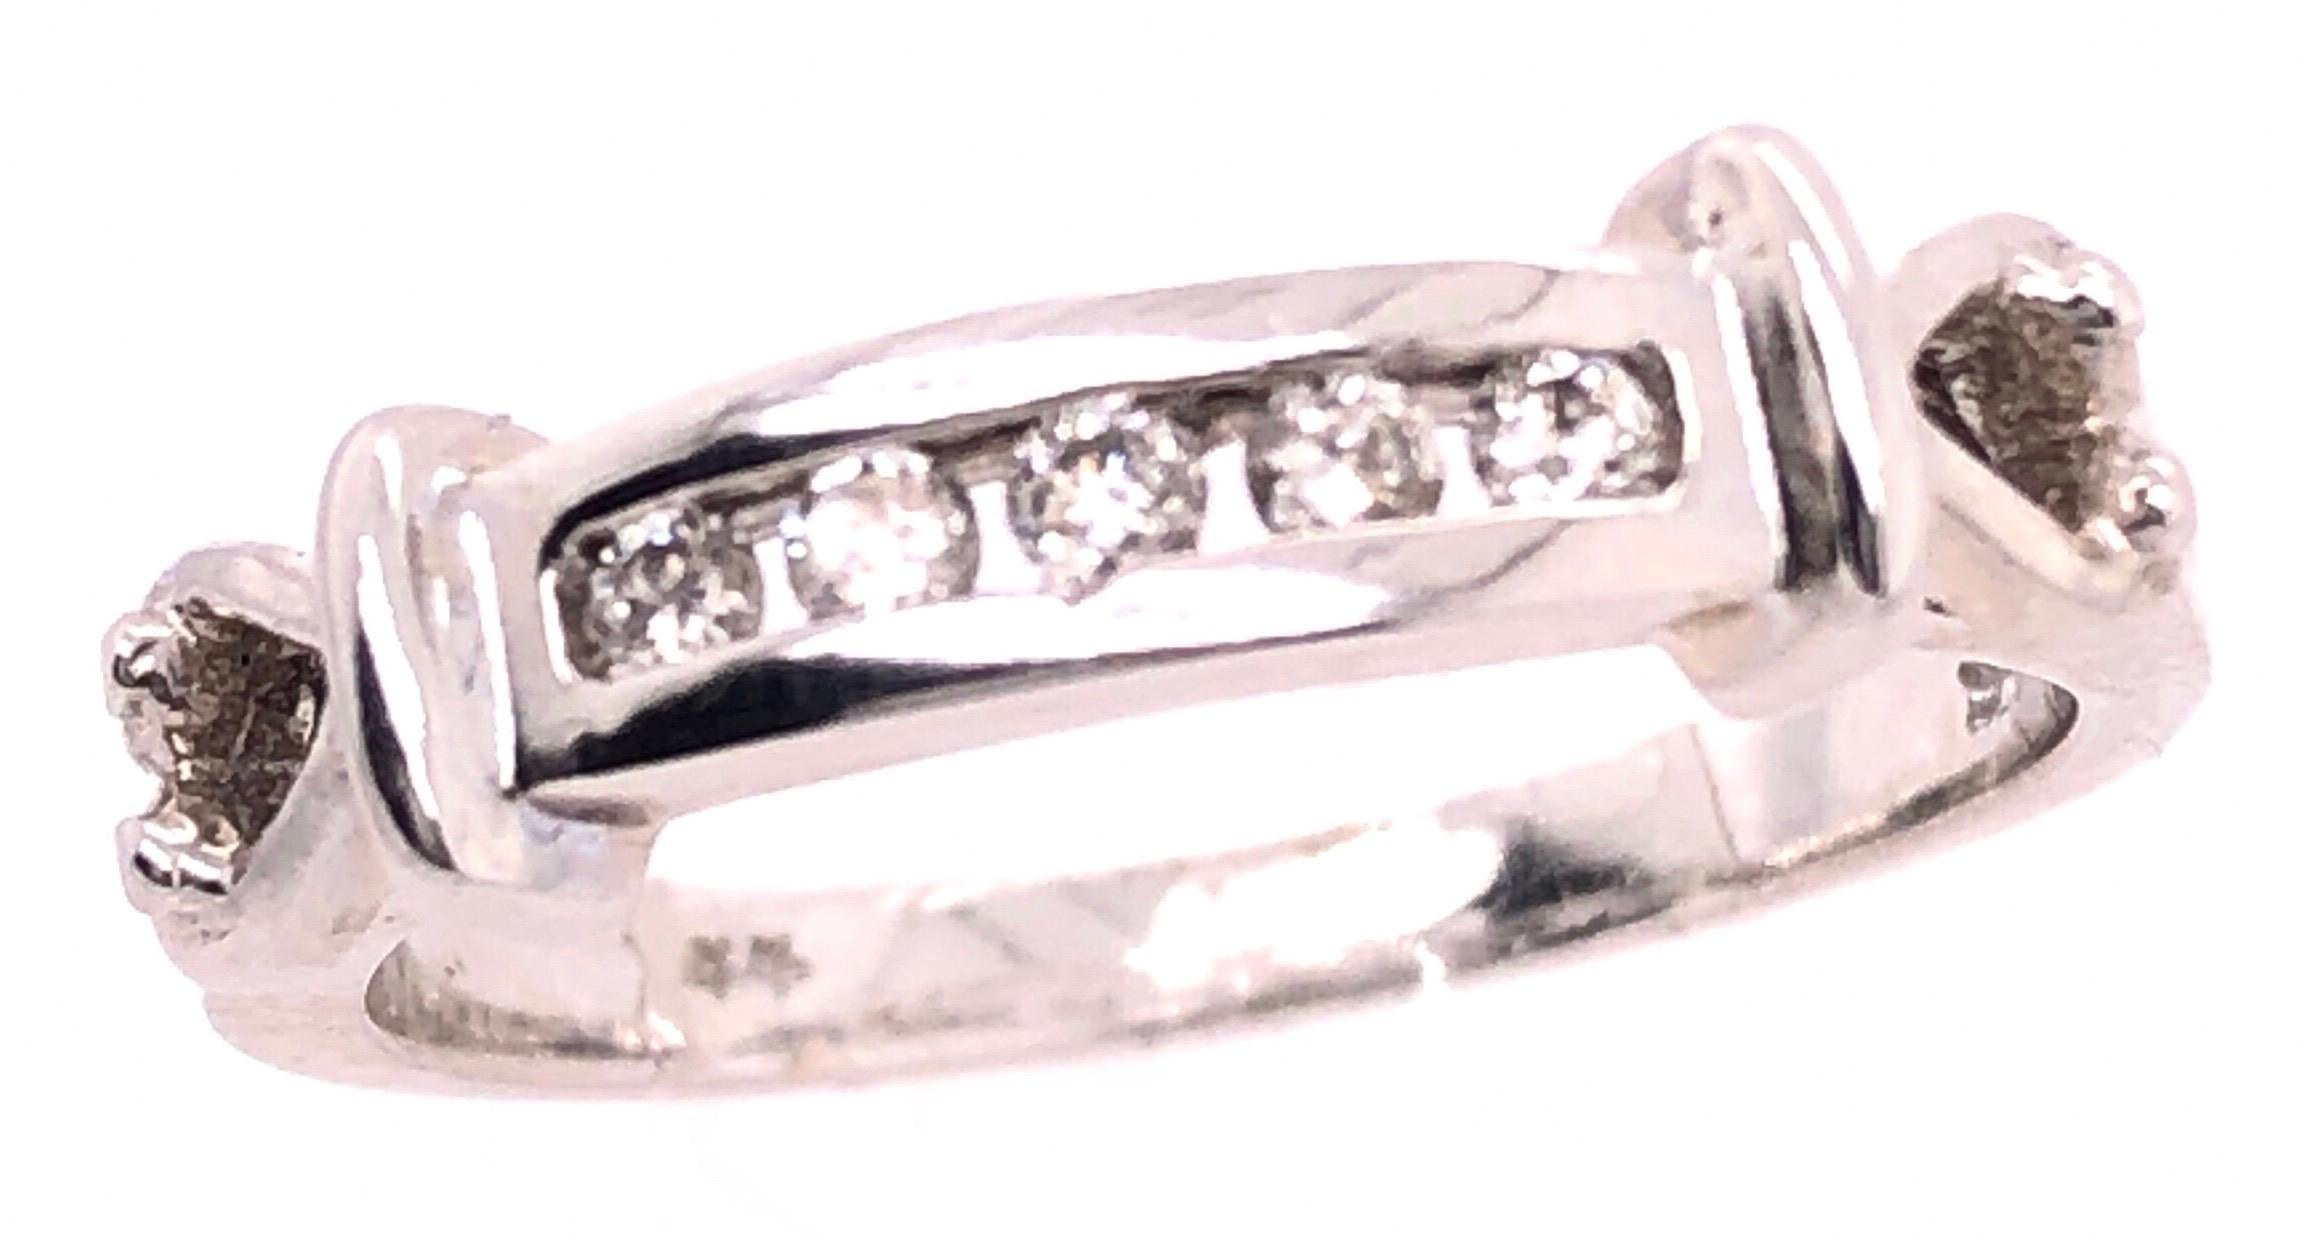 14 Karat White Gold Fashion Ring with Diamonds 0.25 Total Diamond Weight.
Size 7
3.3 grams total weight.